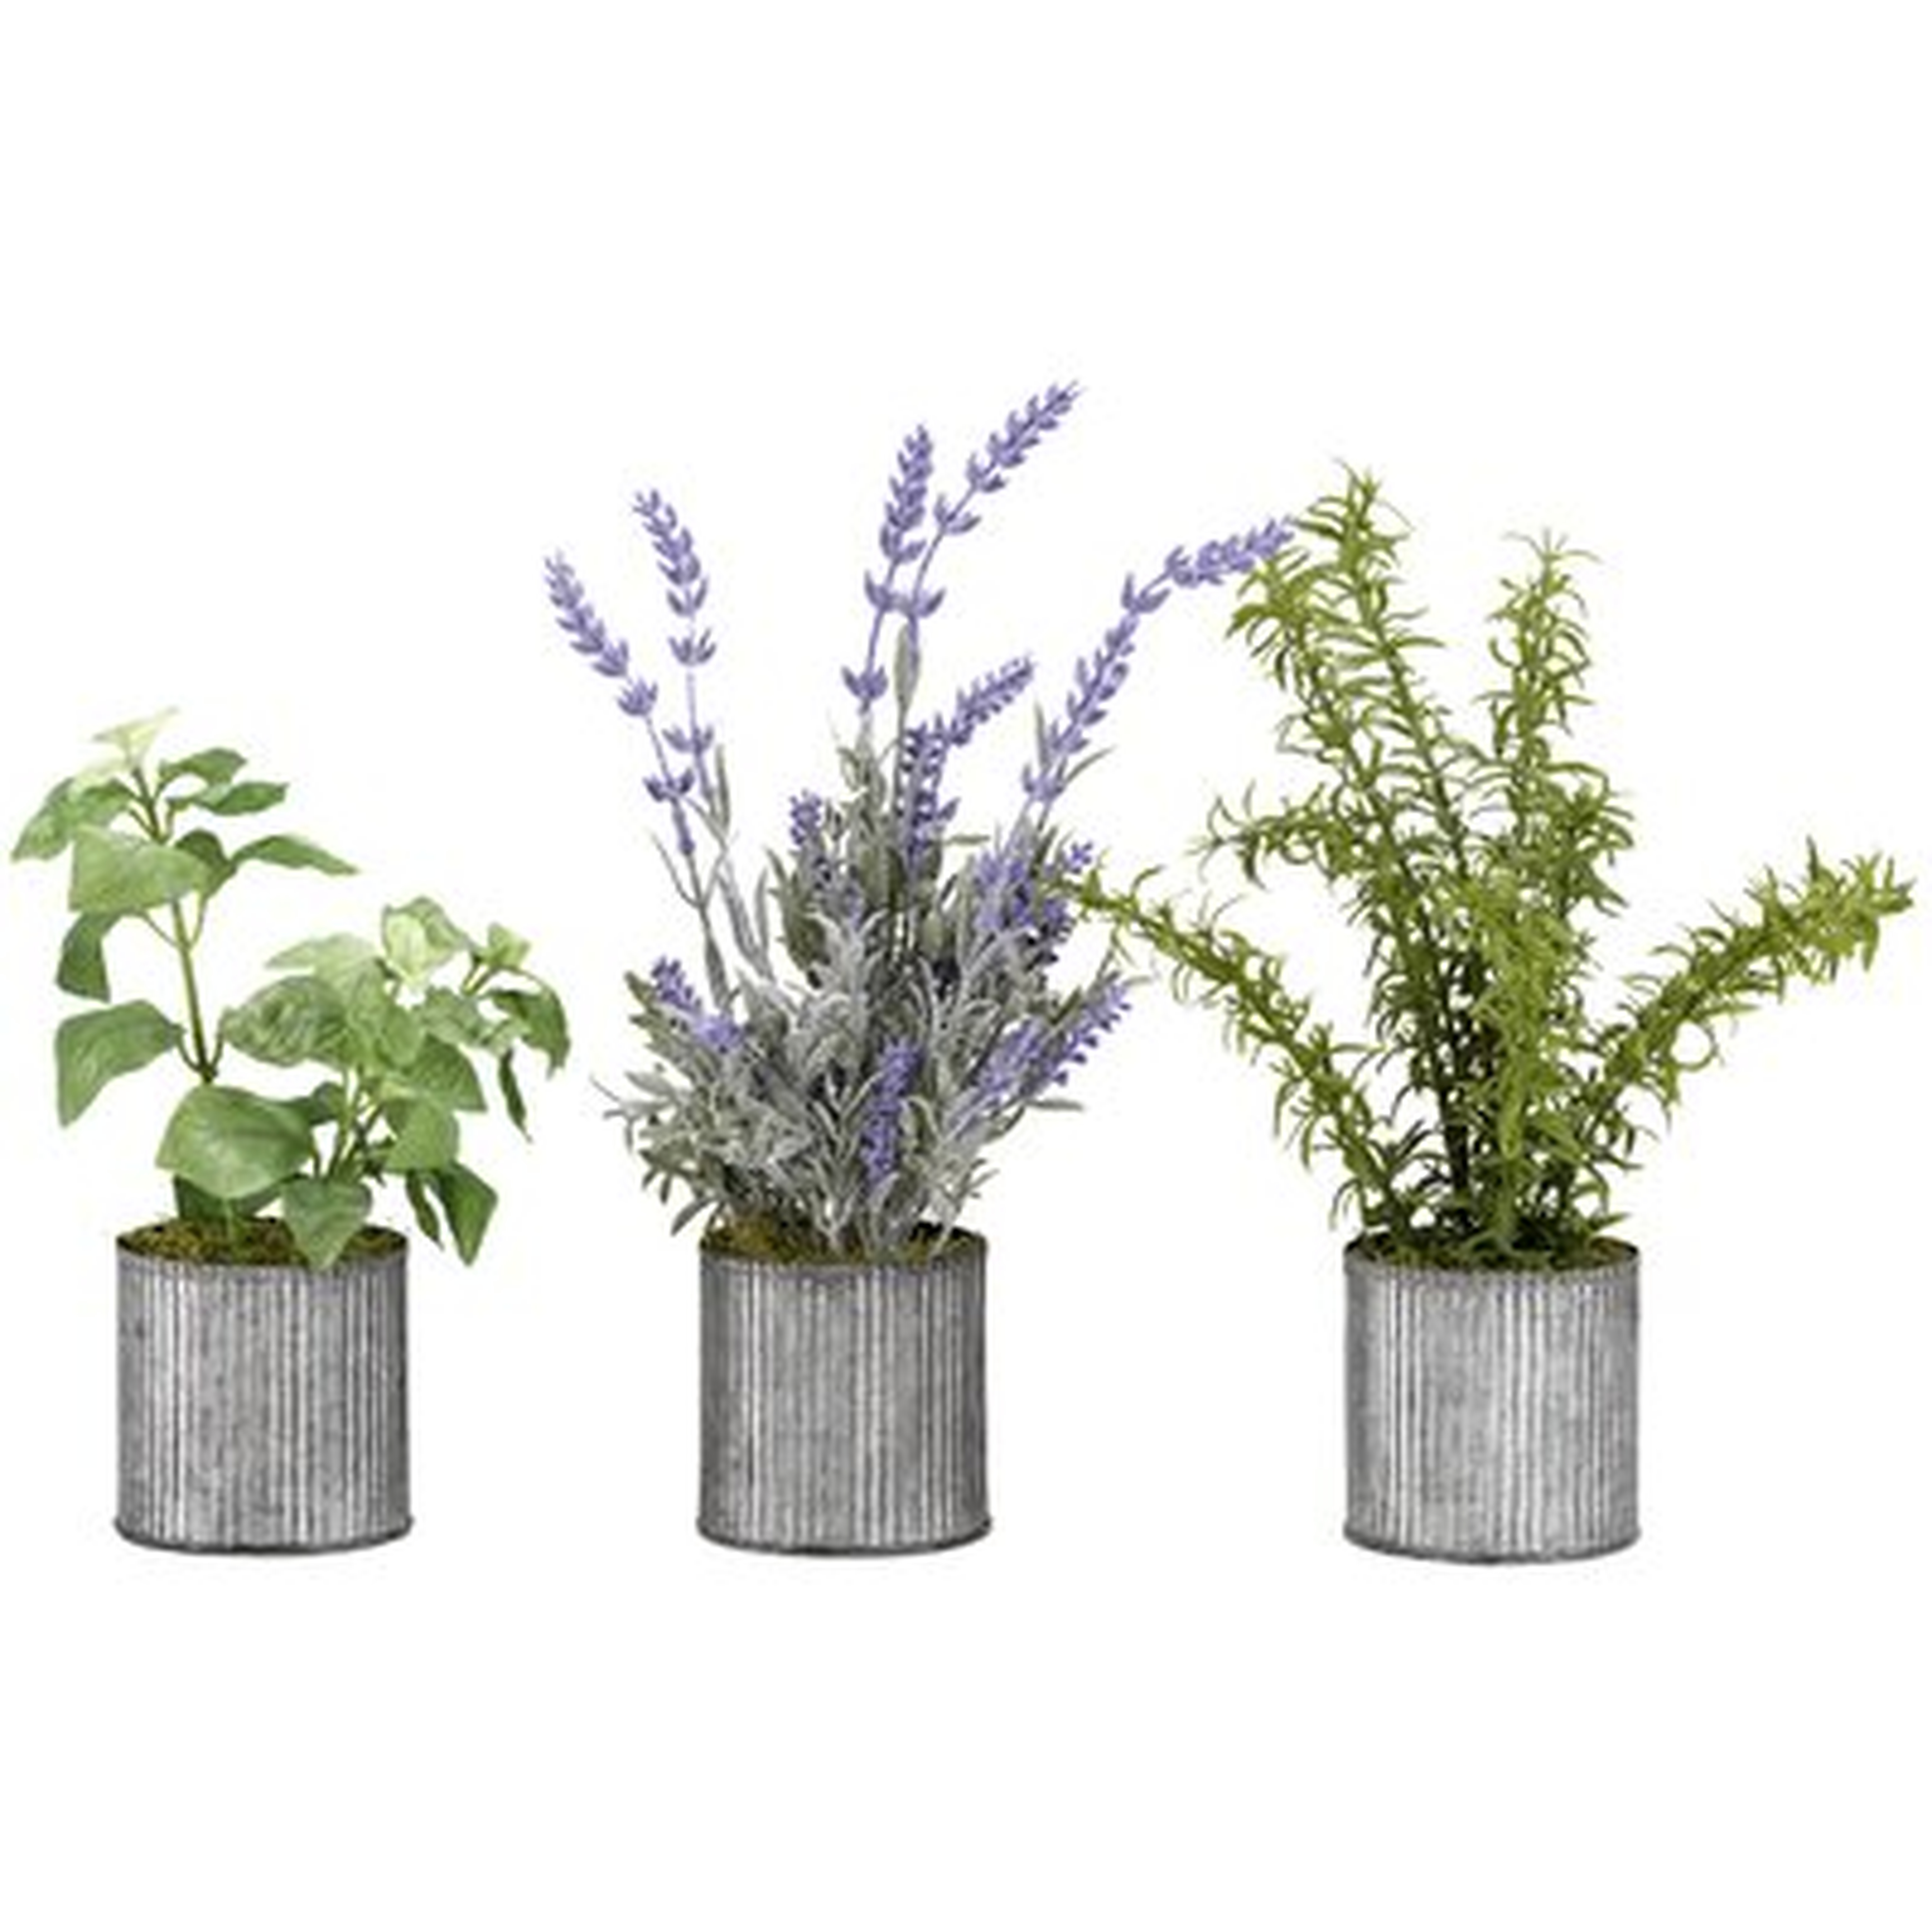 Basil, Lavender and Springeri in Tin Floor Foliage Plant in Planter Set - Wayfair